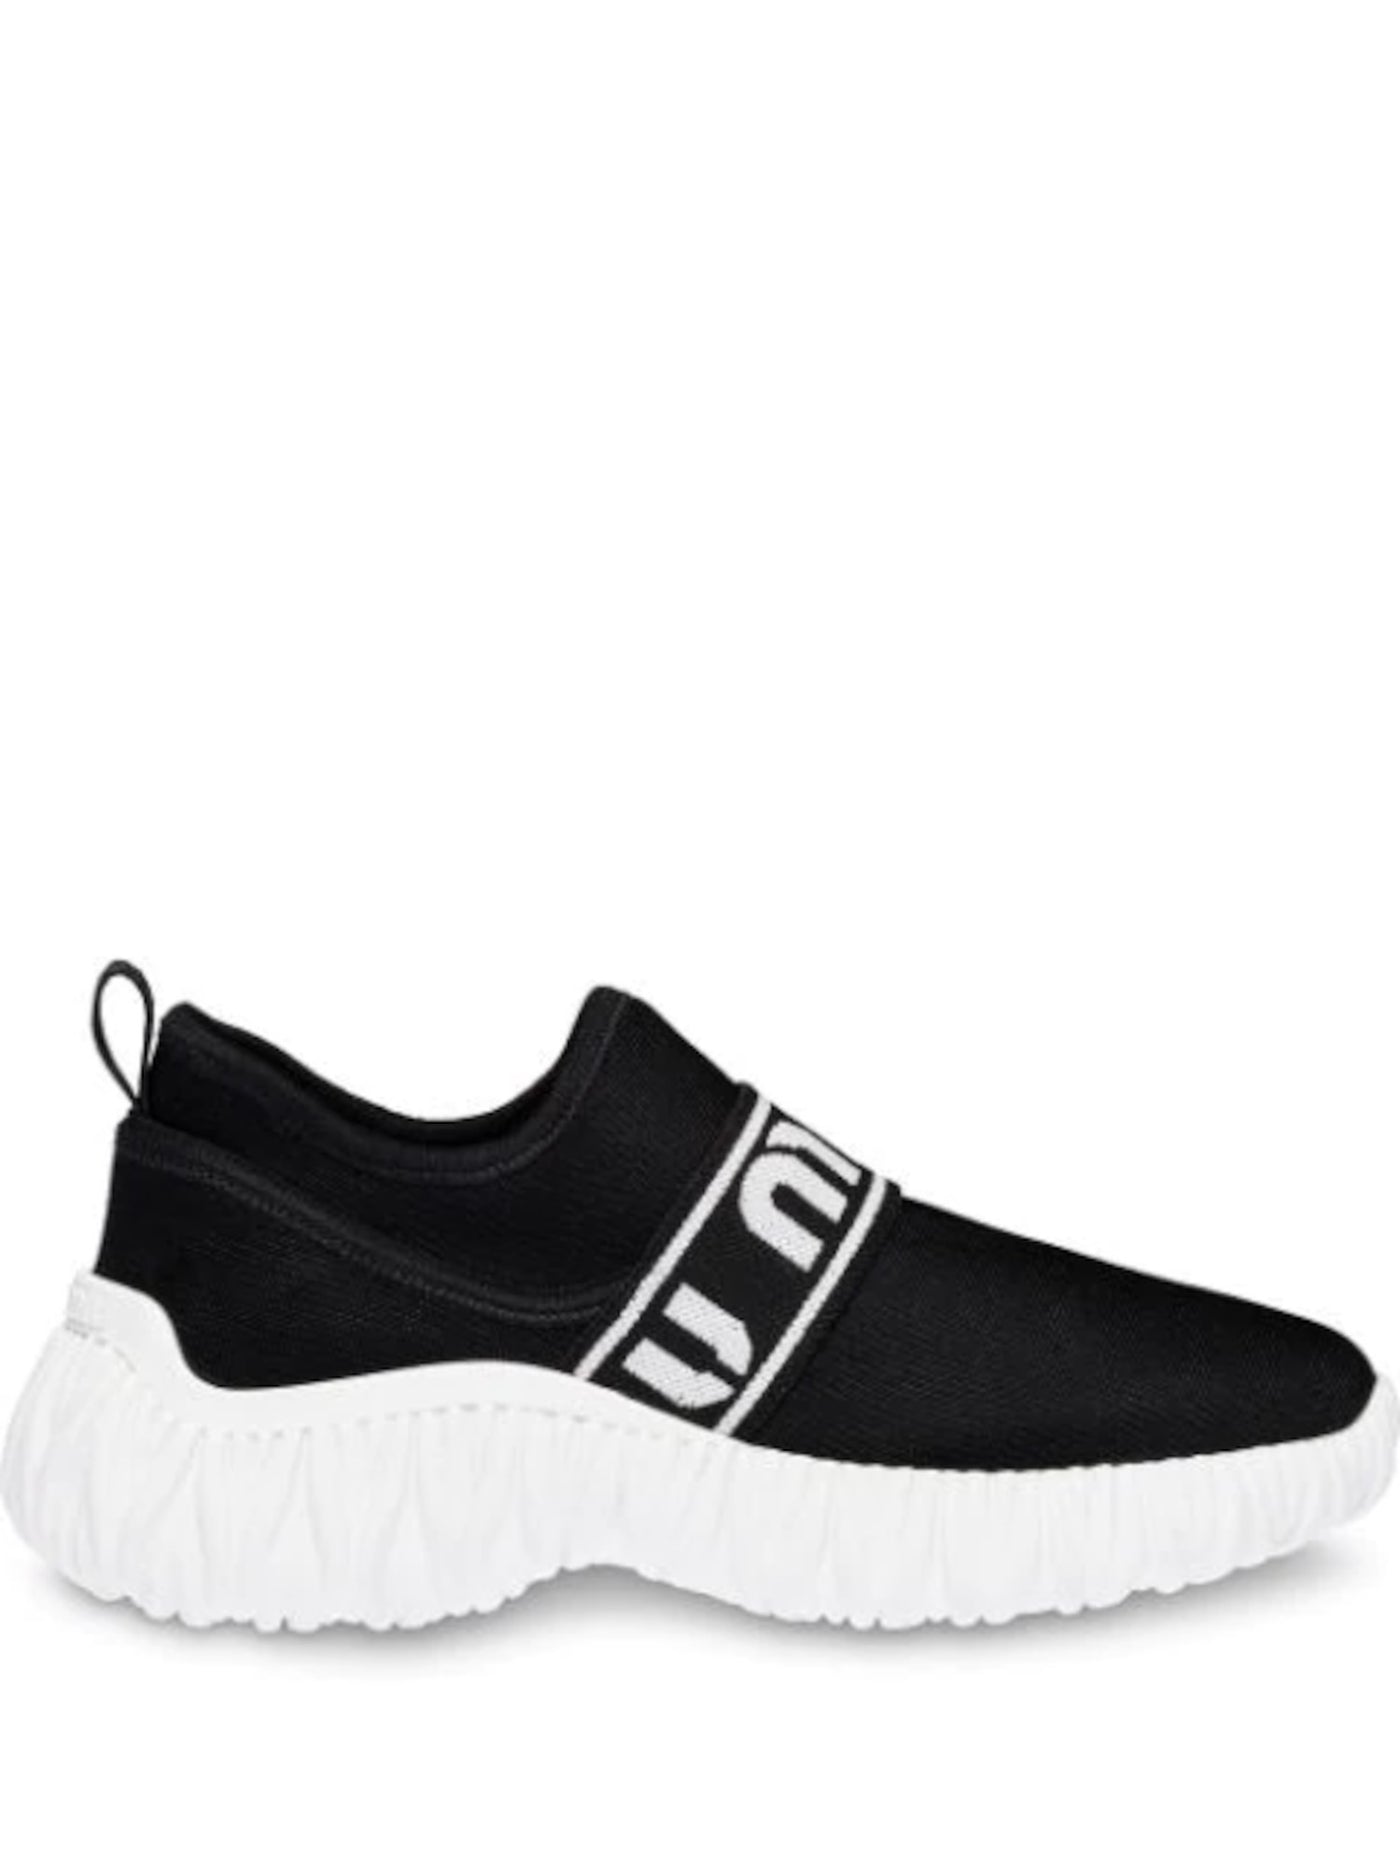 MIU MIU Womens Black 1.5" Platform Logo Calzature Donna Round Toe Platform Slip On Athletic Running Shoes 40